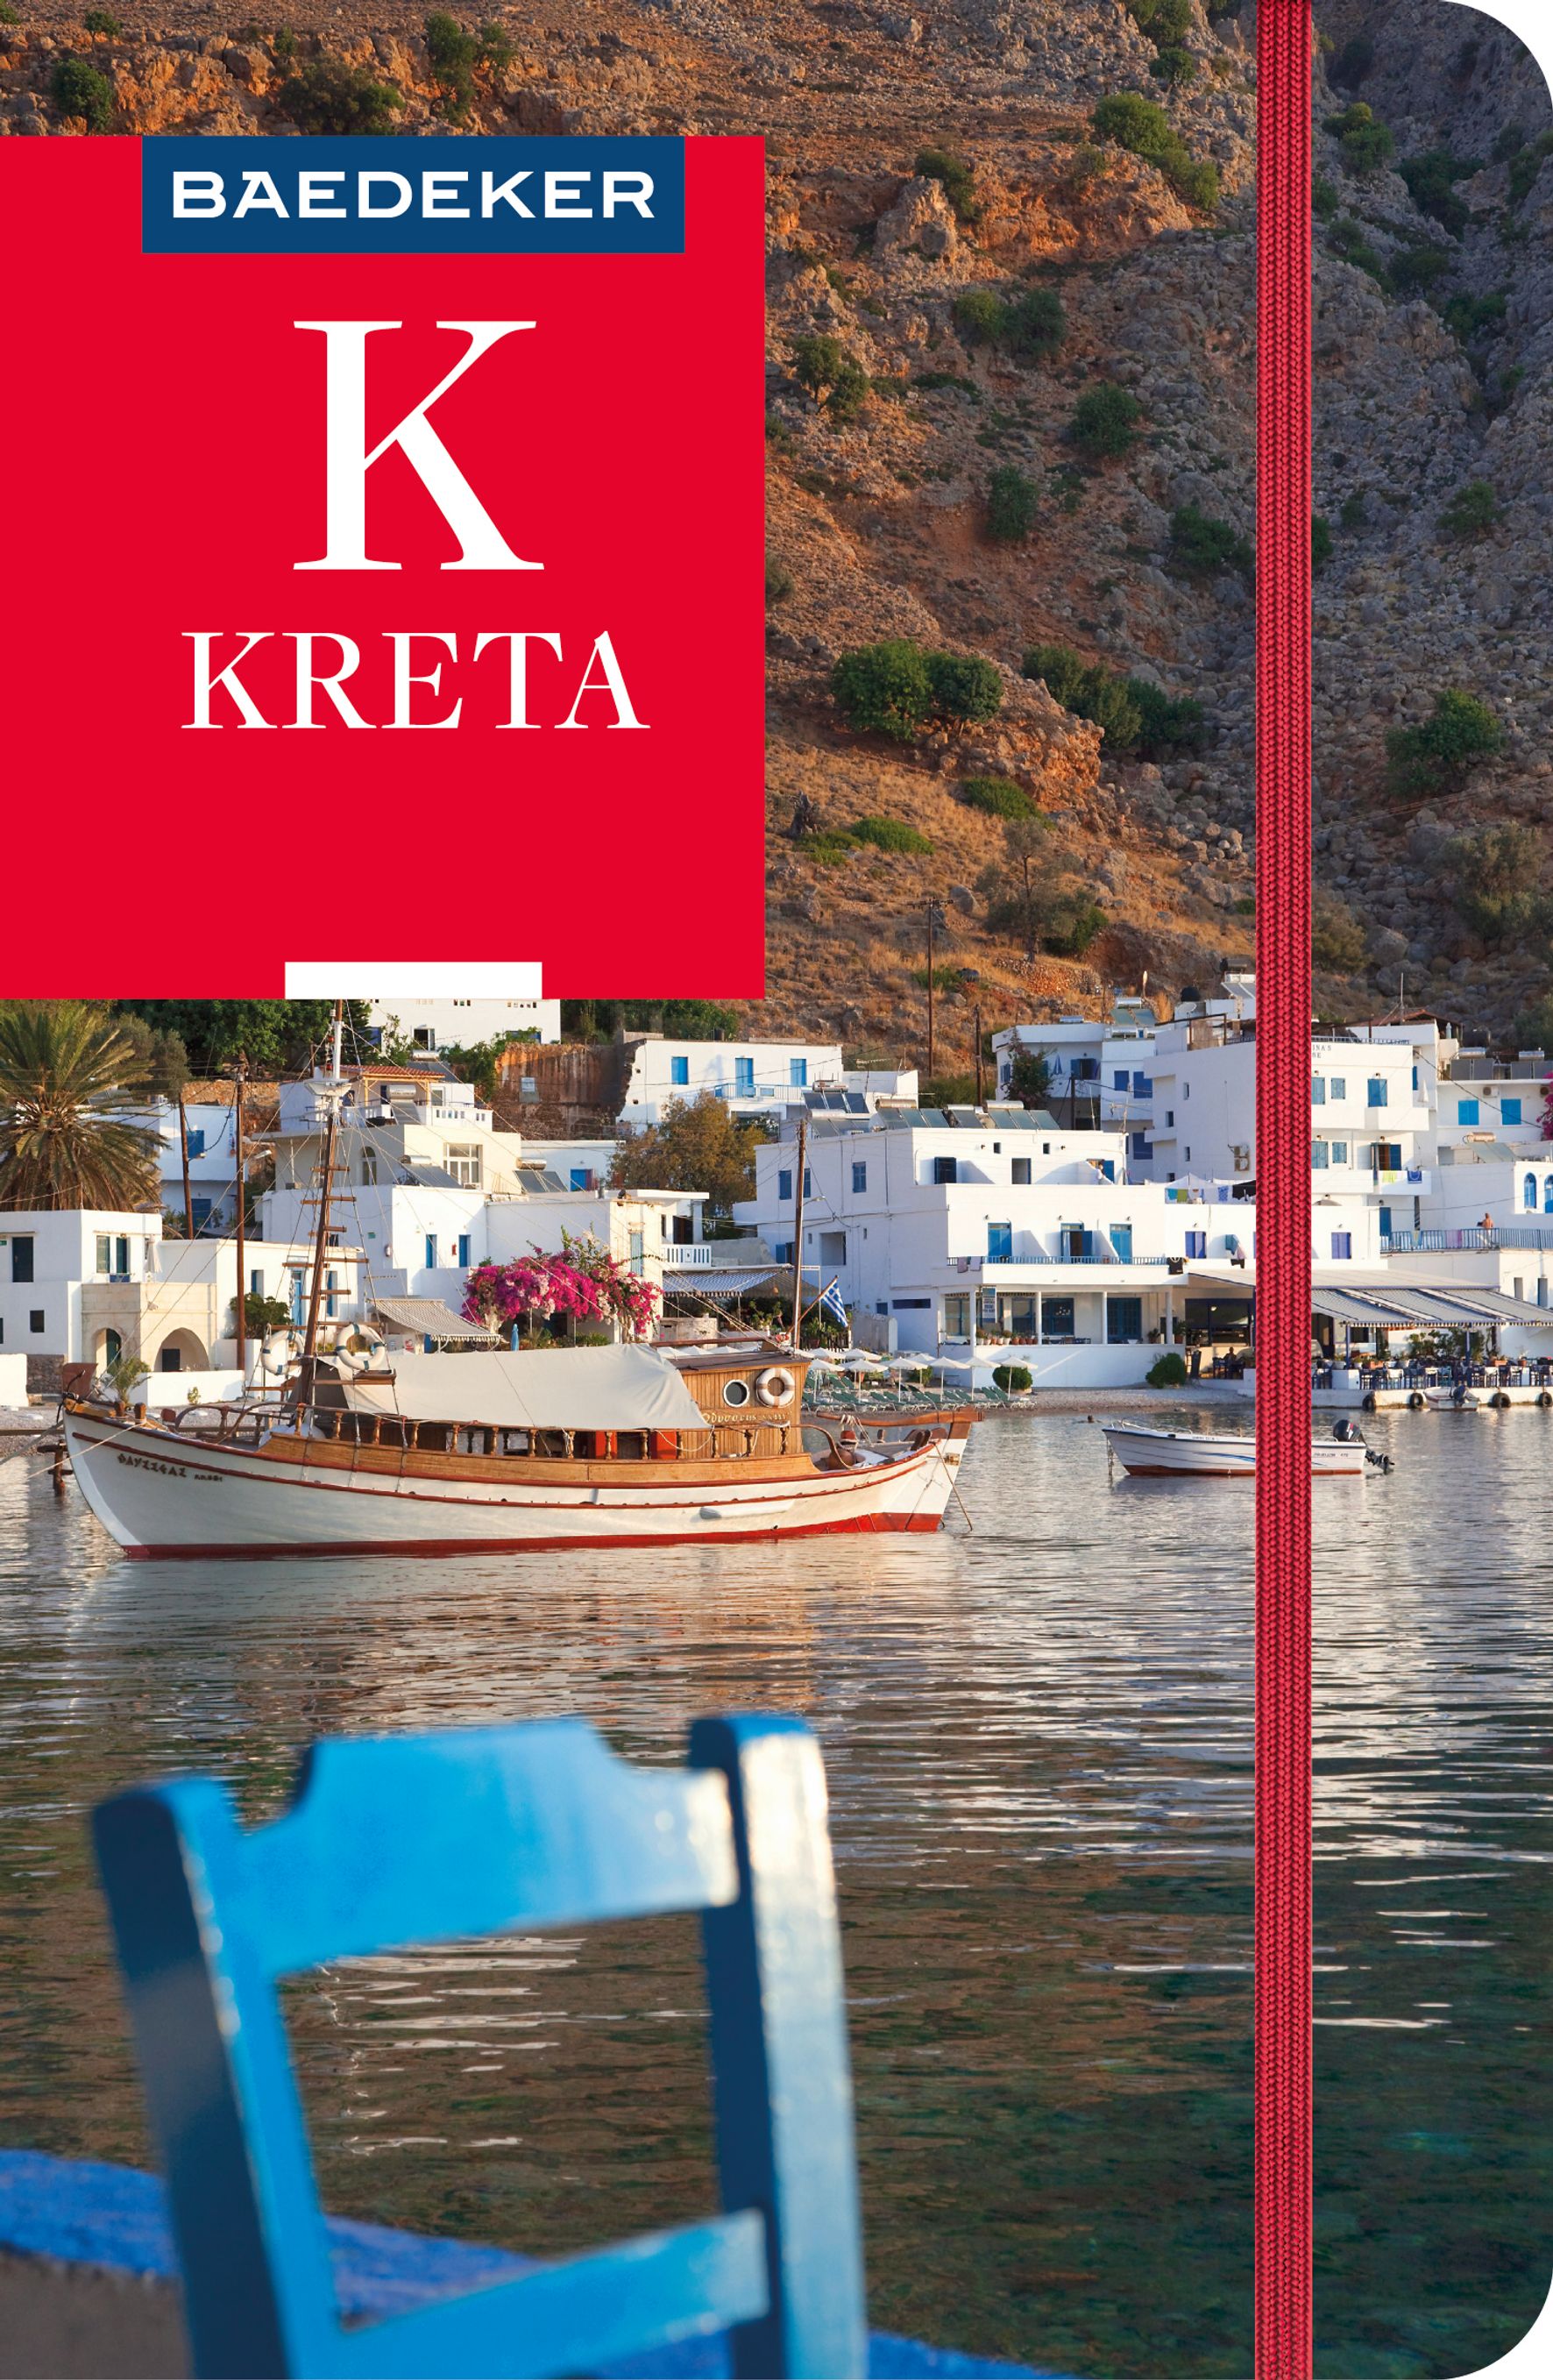 Baedeker Kreta